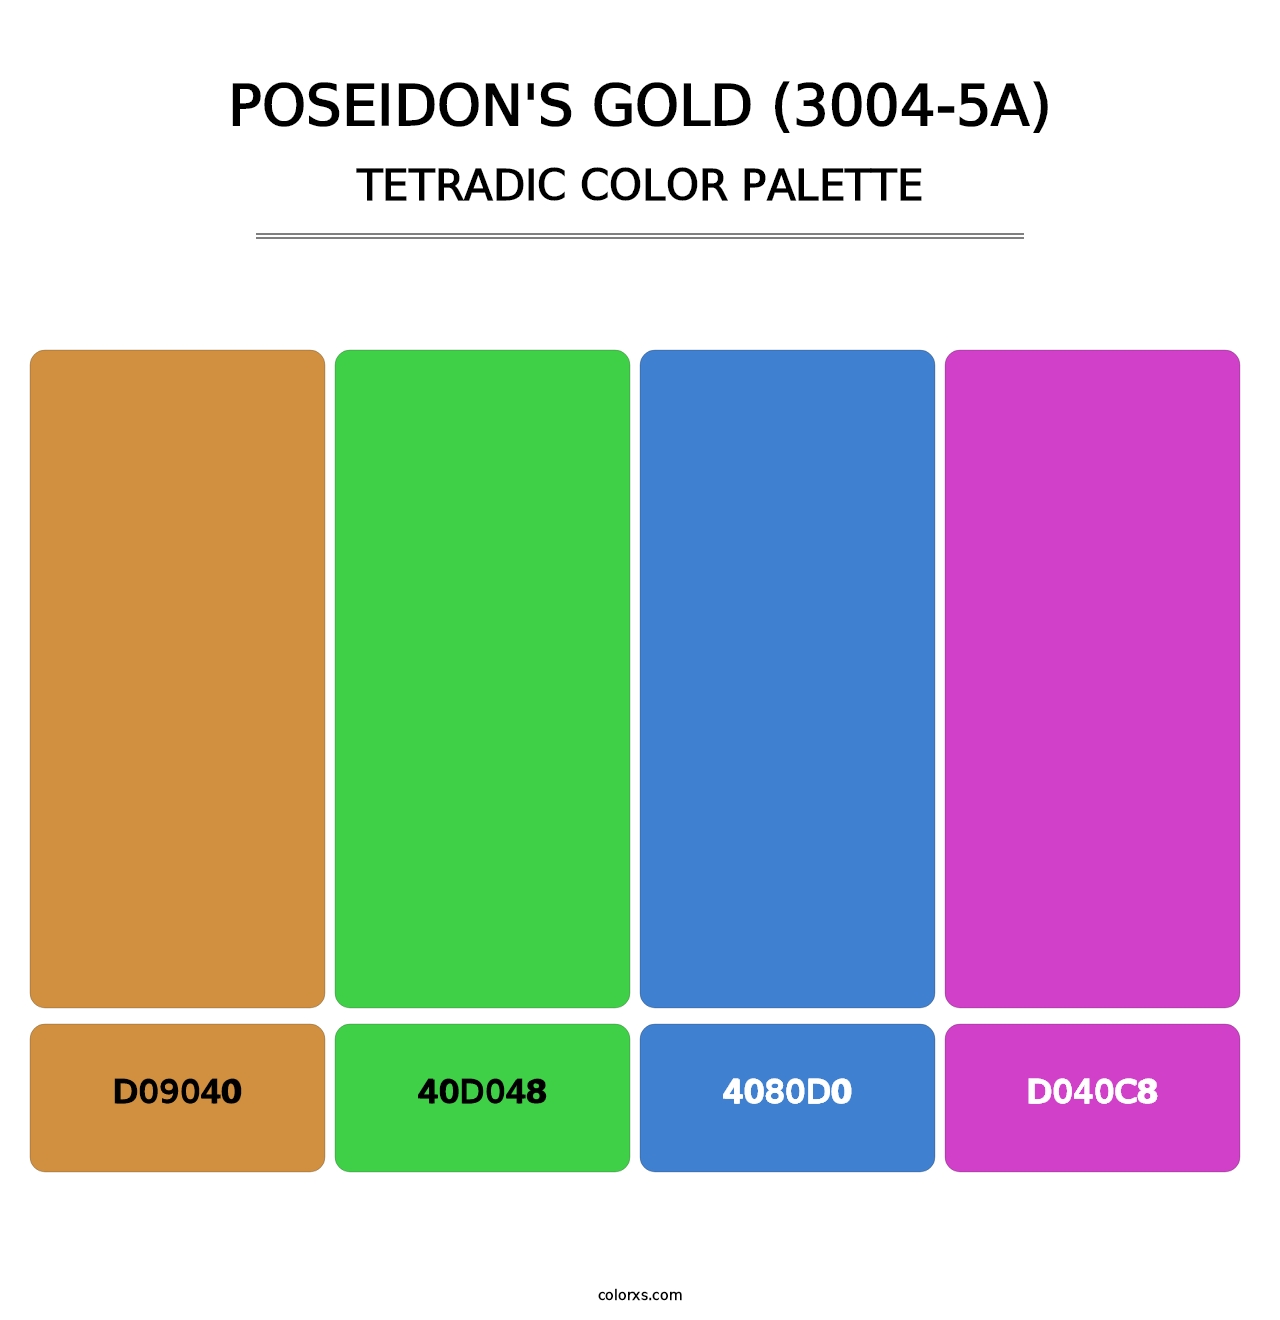 Poseidon's Gold (3004-5A) - Tetradic Color Palette